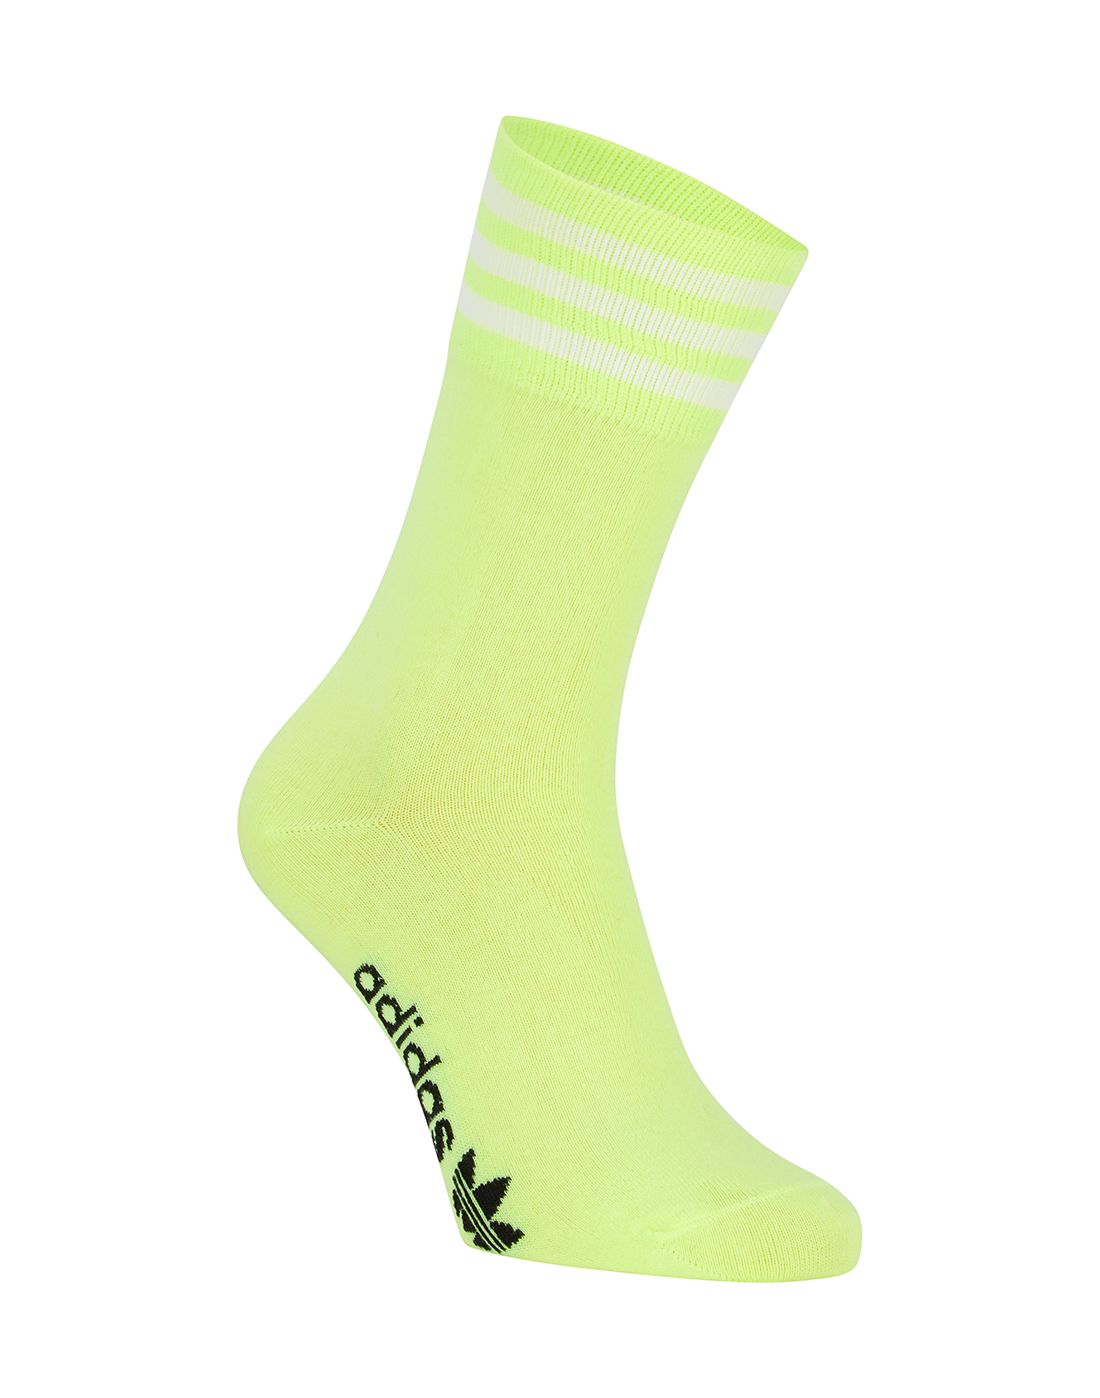 neon green adidas socks